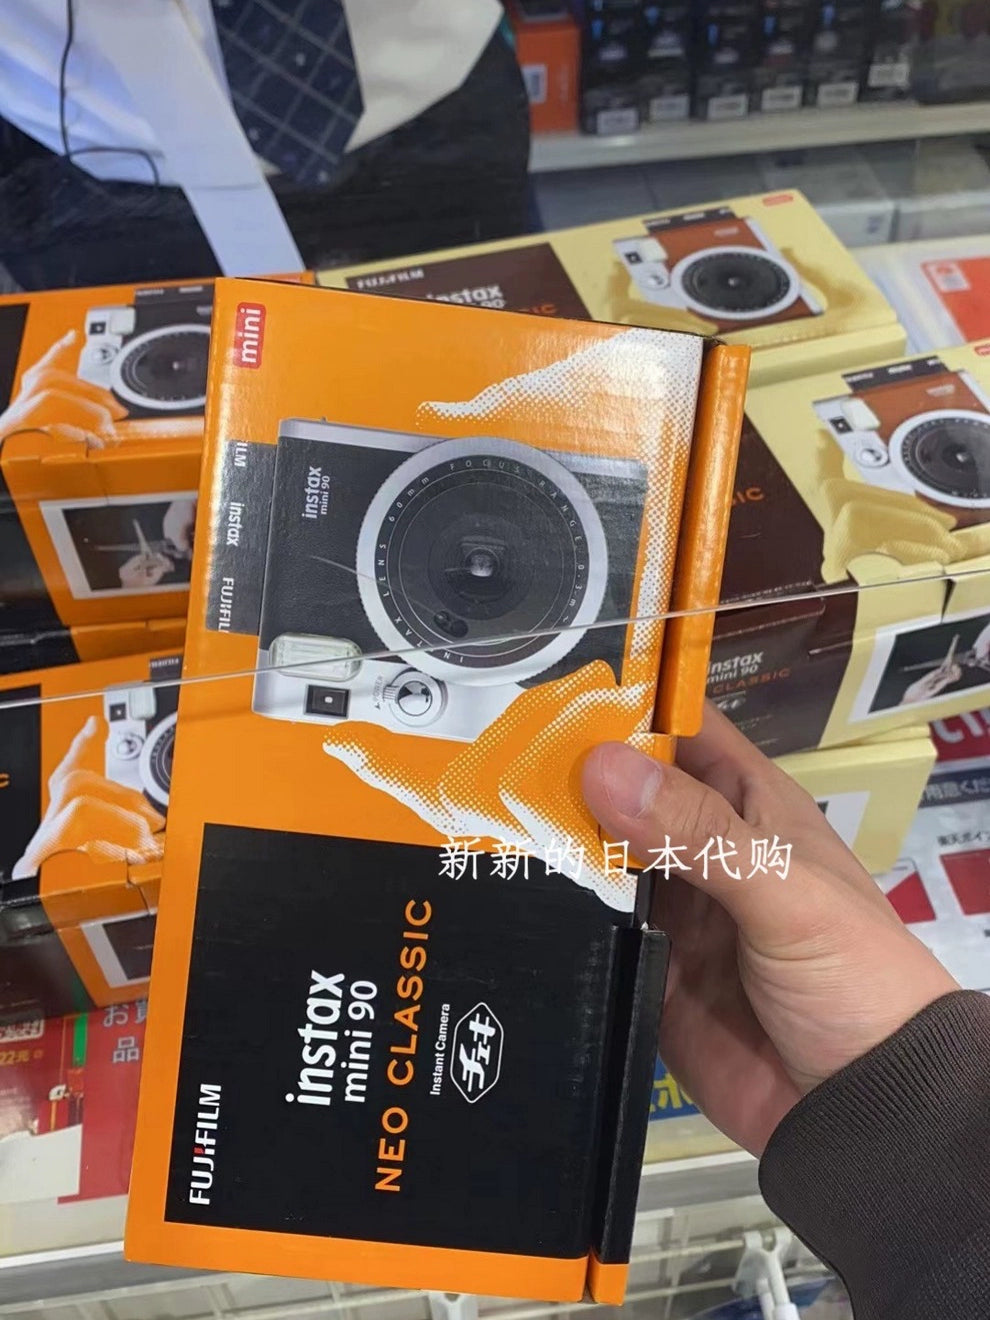 Japan original new purchase Fujifilm Polaroid mini90 one-time imaging mini vintage film camera (Shipping not included)